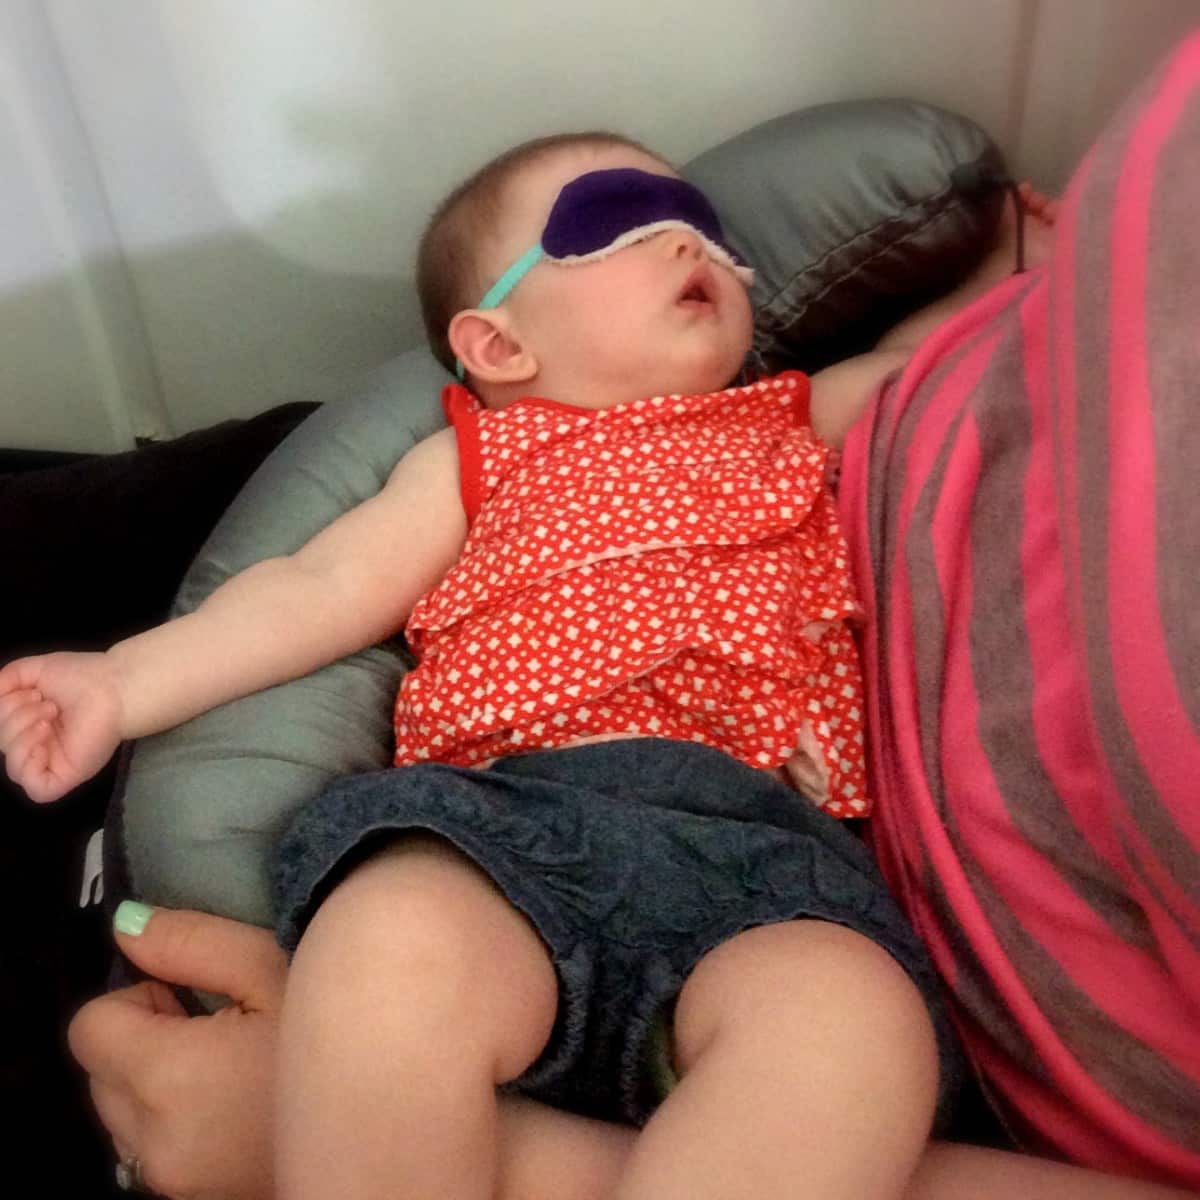 Sleeping on the airplane with the sleep mask